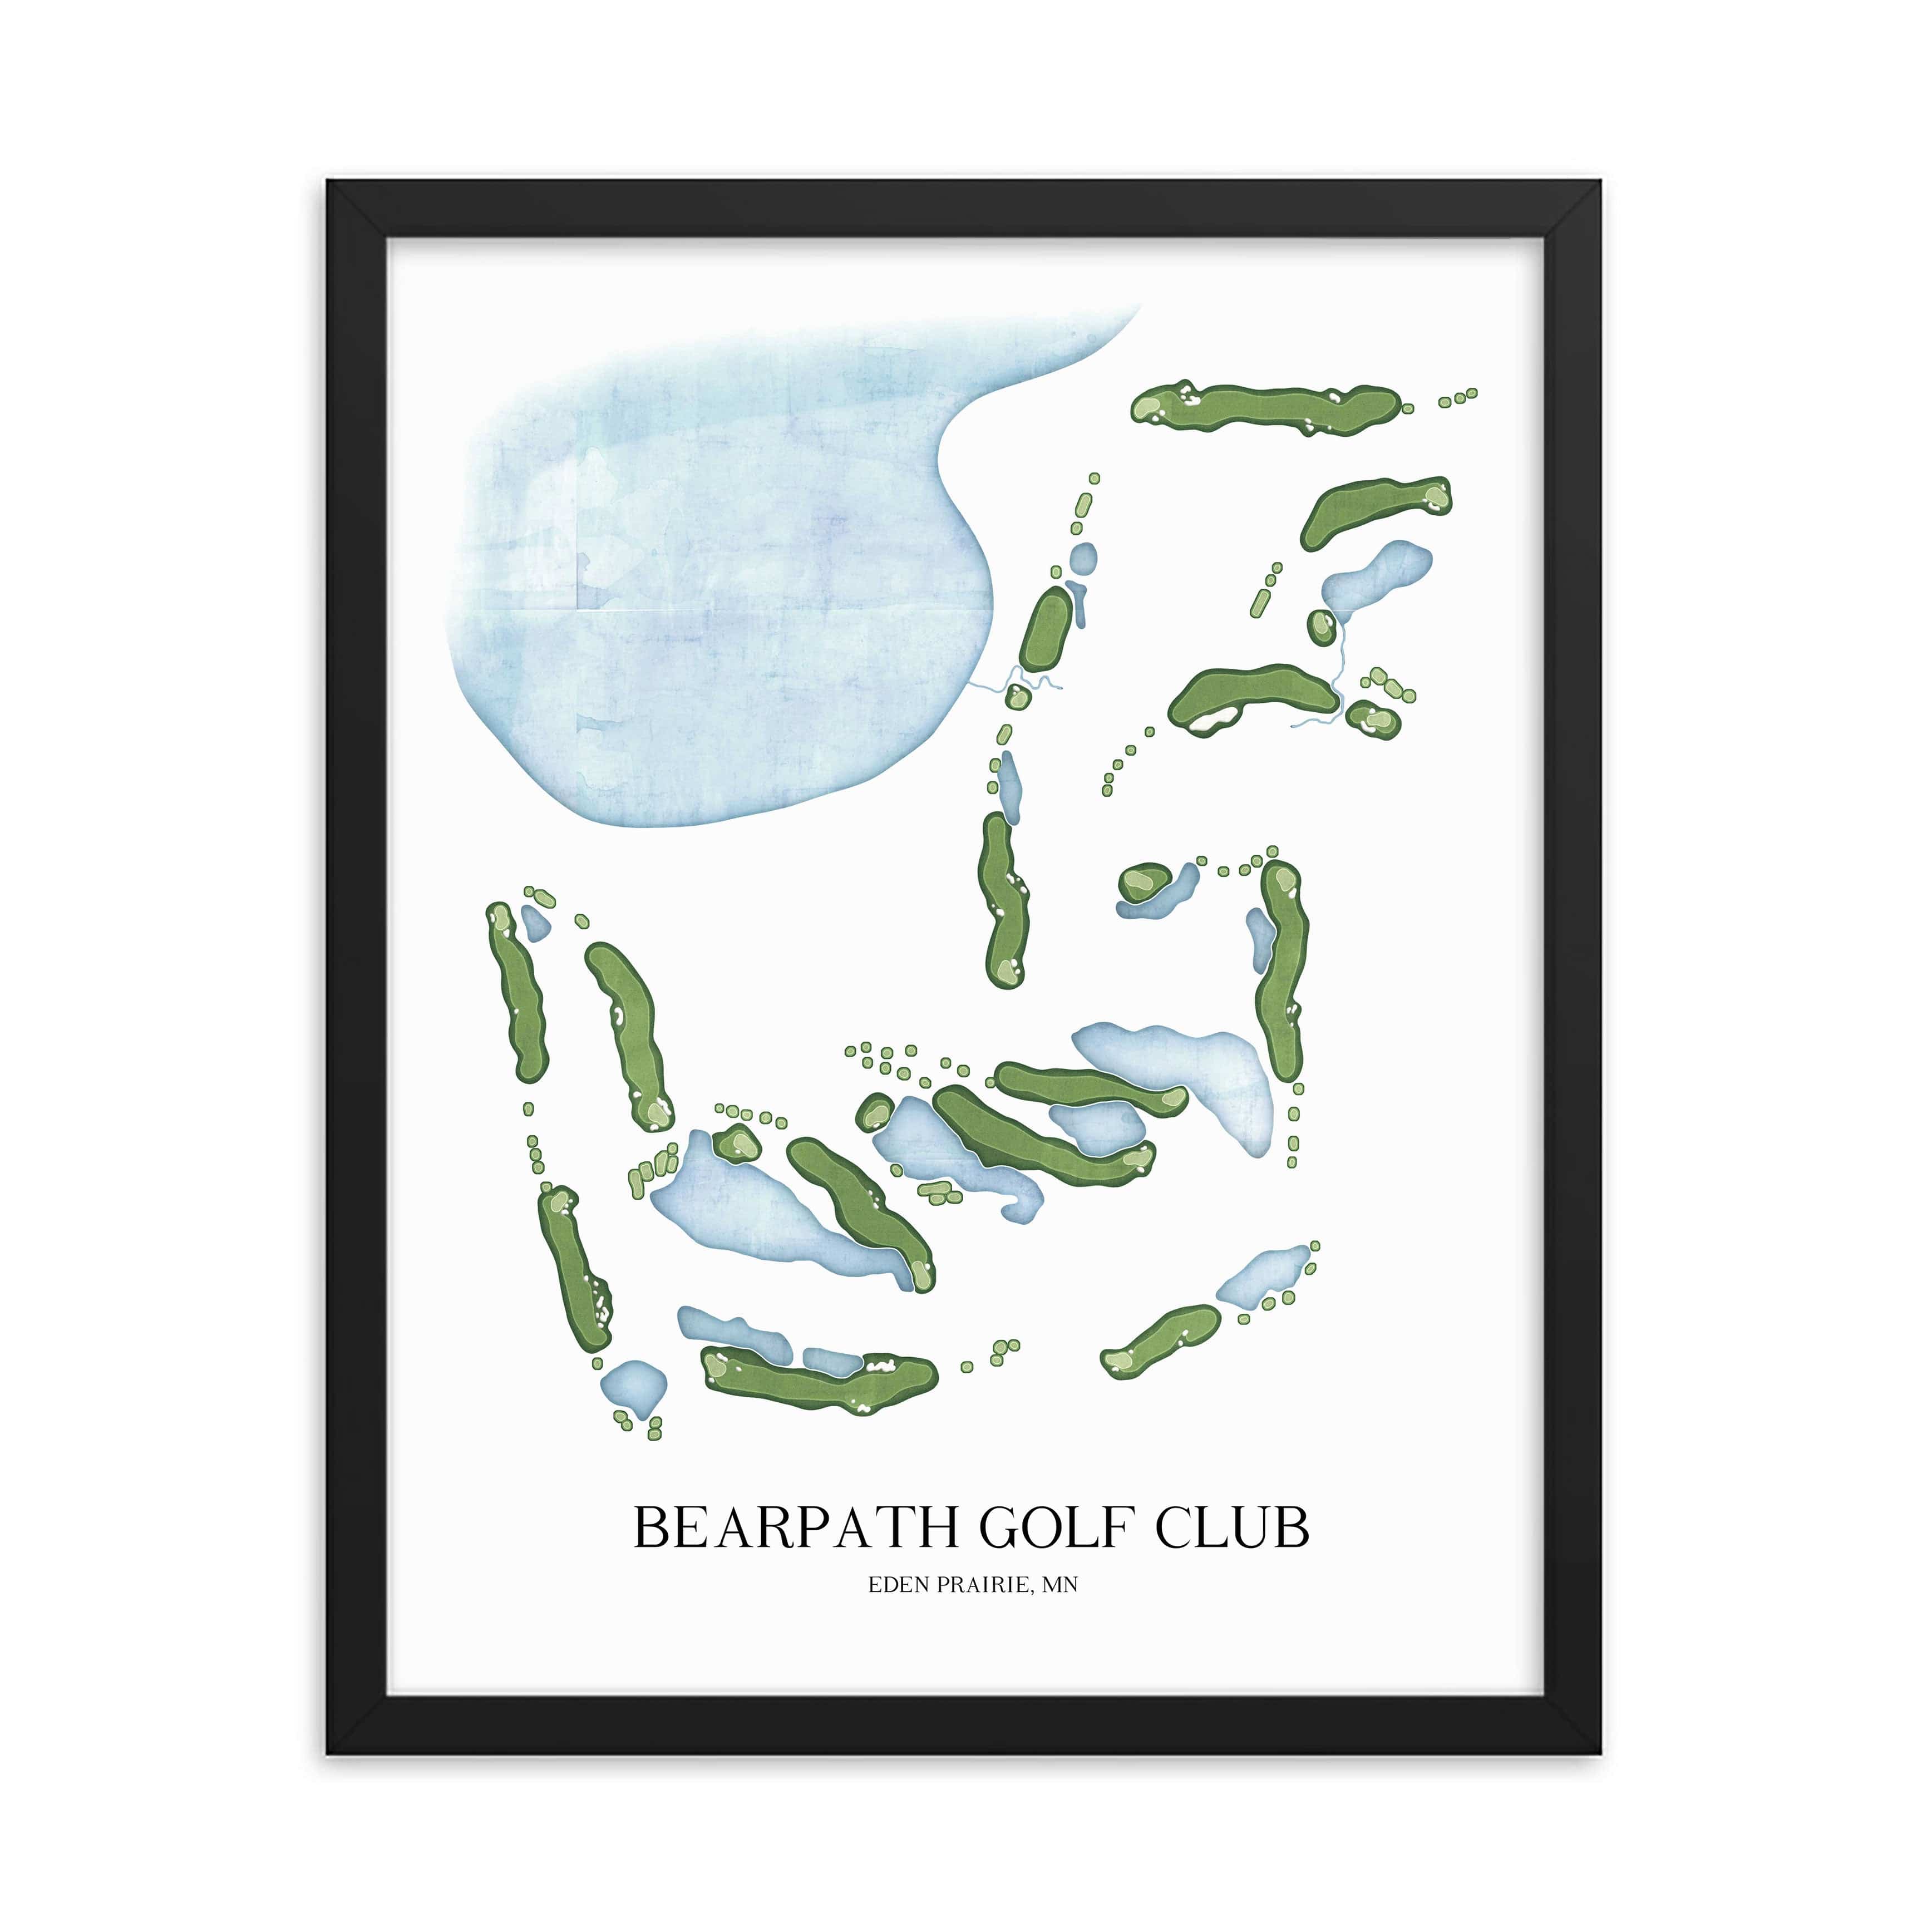 The 19th Hole Golf Shop - Golf Course Prints -  Bearpath Golf Club Golf Course Map